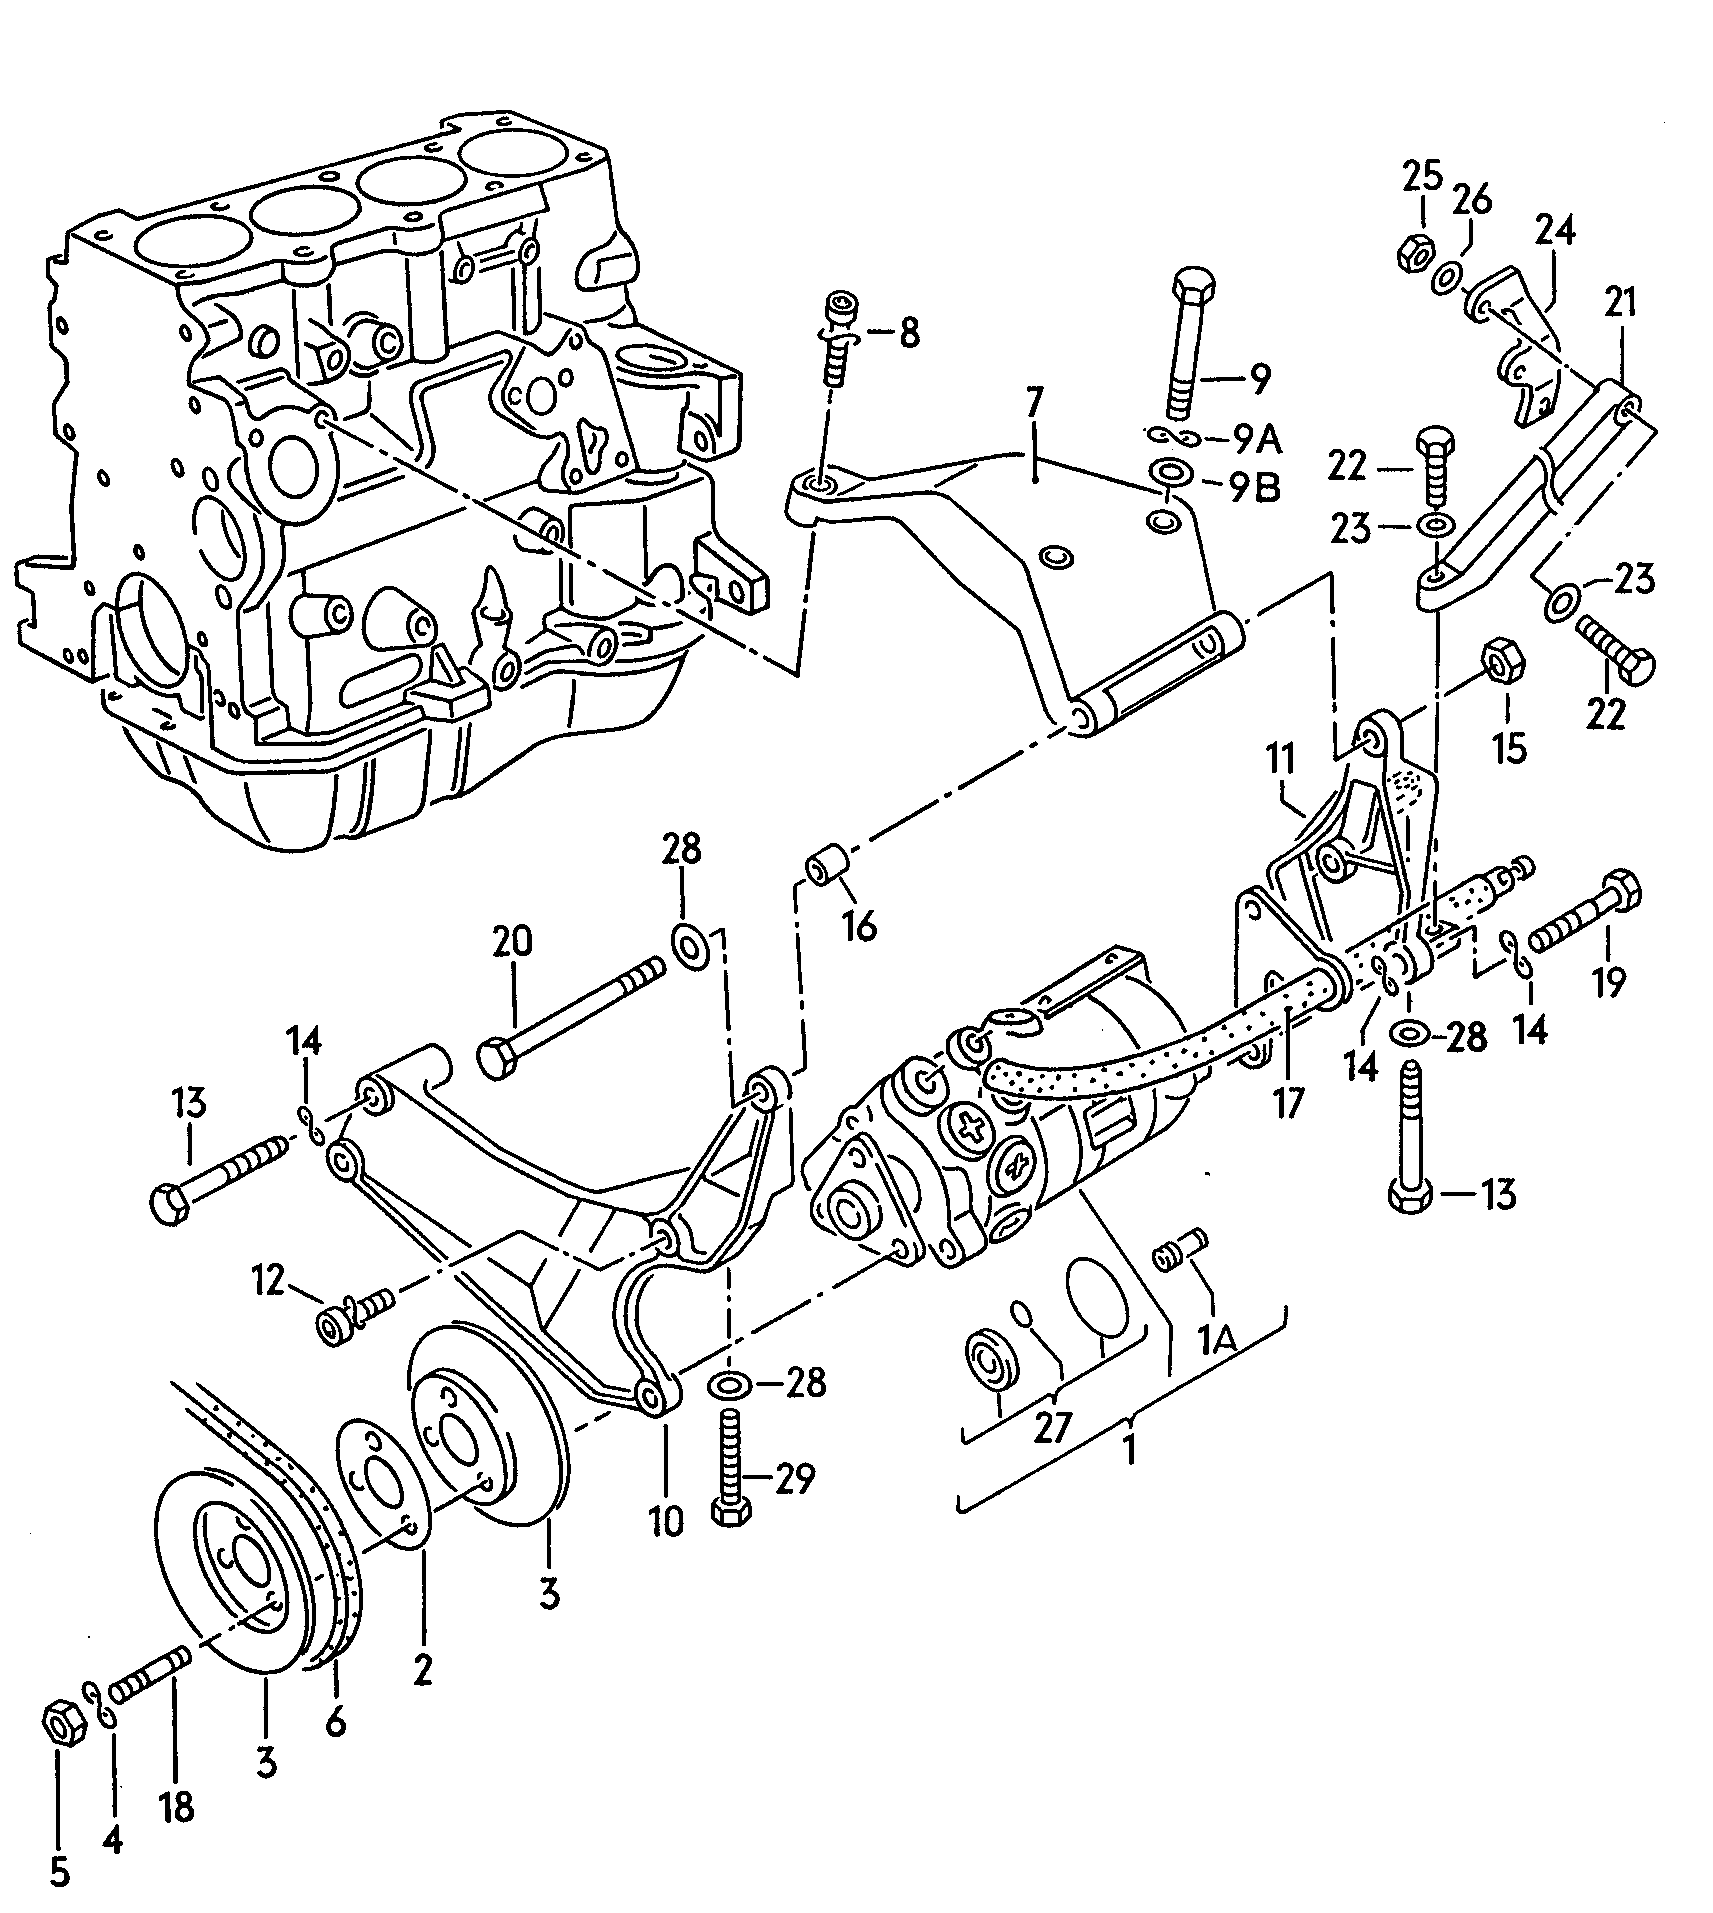 central hydraulic pump1.circuit = power steering<br>2.circuit = hydraulic<br>brake servo or<br>self-leveling system 1.8ltr. - Audi 100/Avant - a100